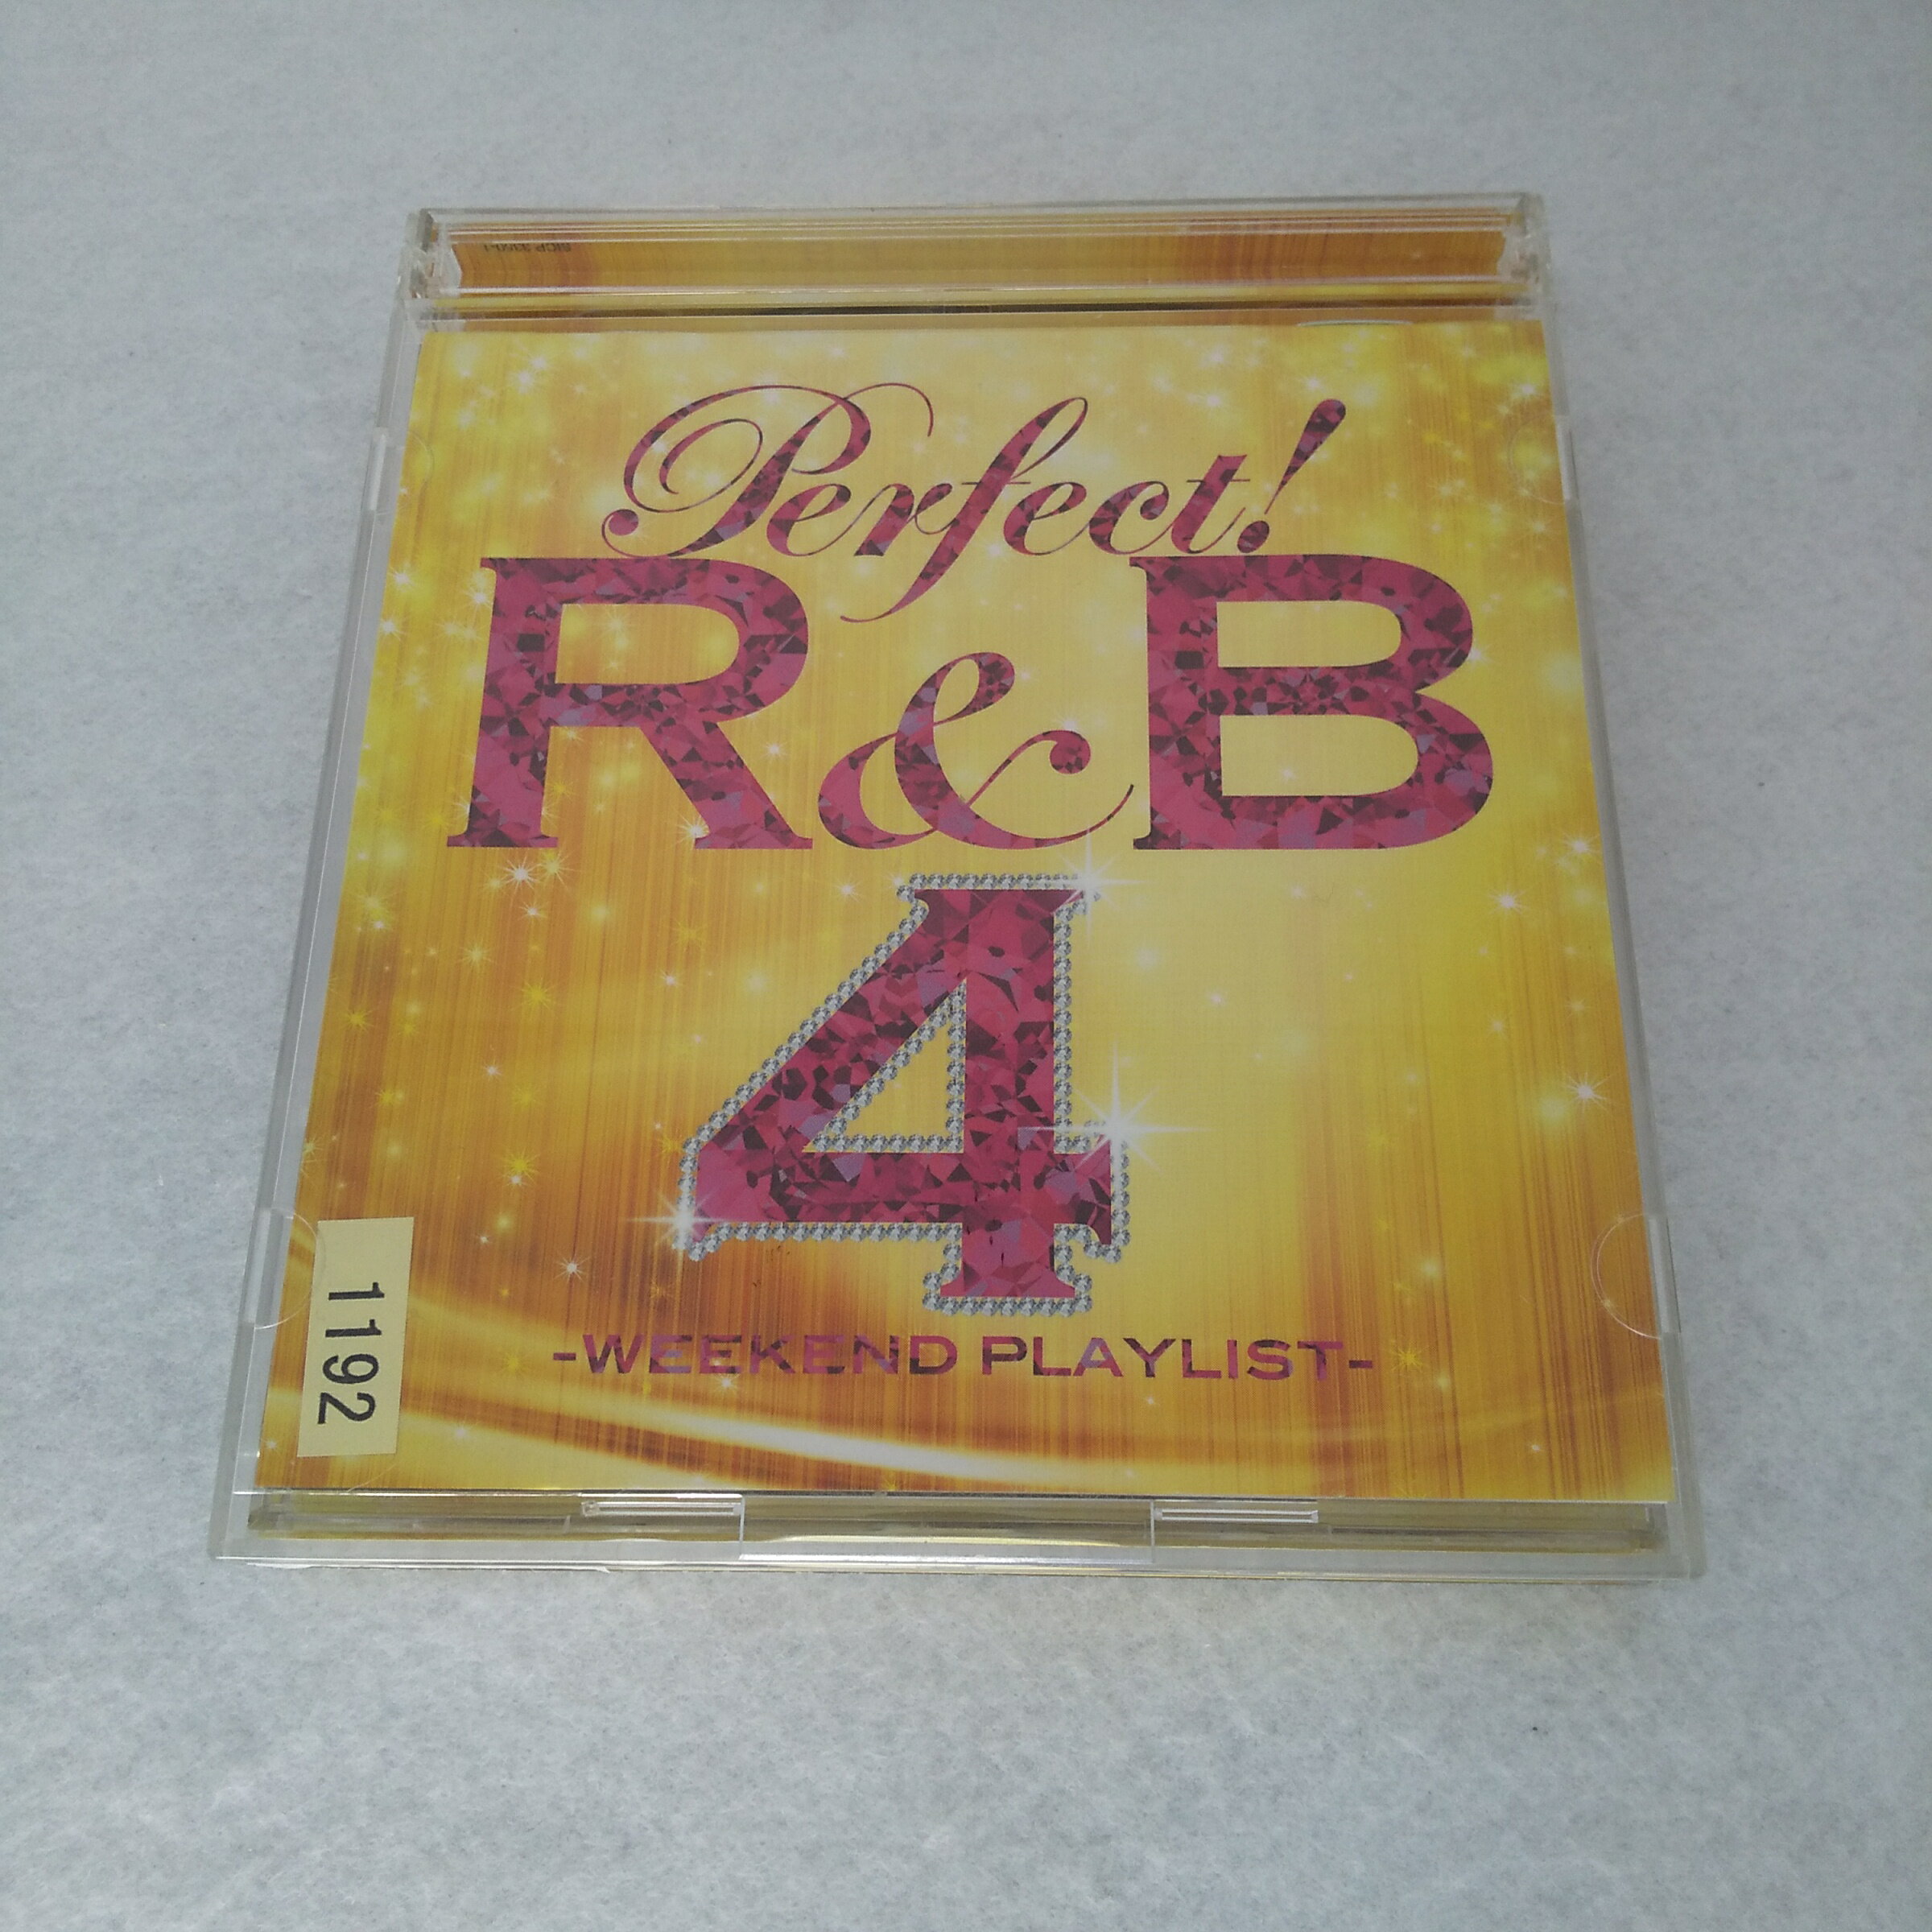 AC10342 š CD Perfect! R&B 4 -WEEKEND PLAYLIST-/MICHAEL JACKSON ¾